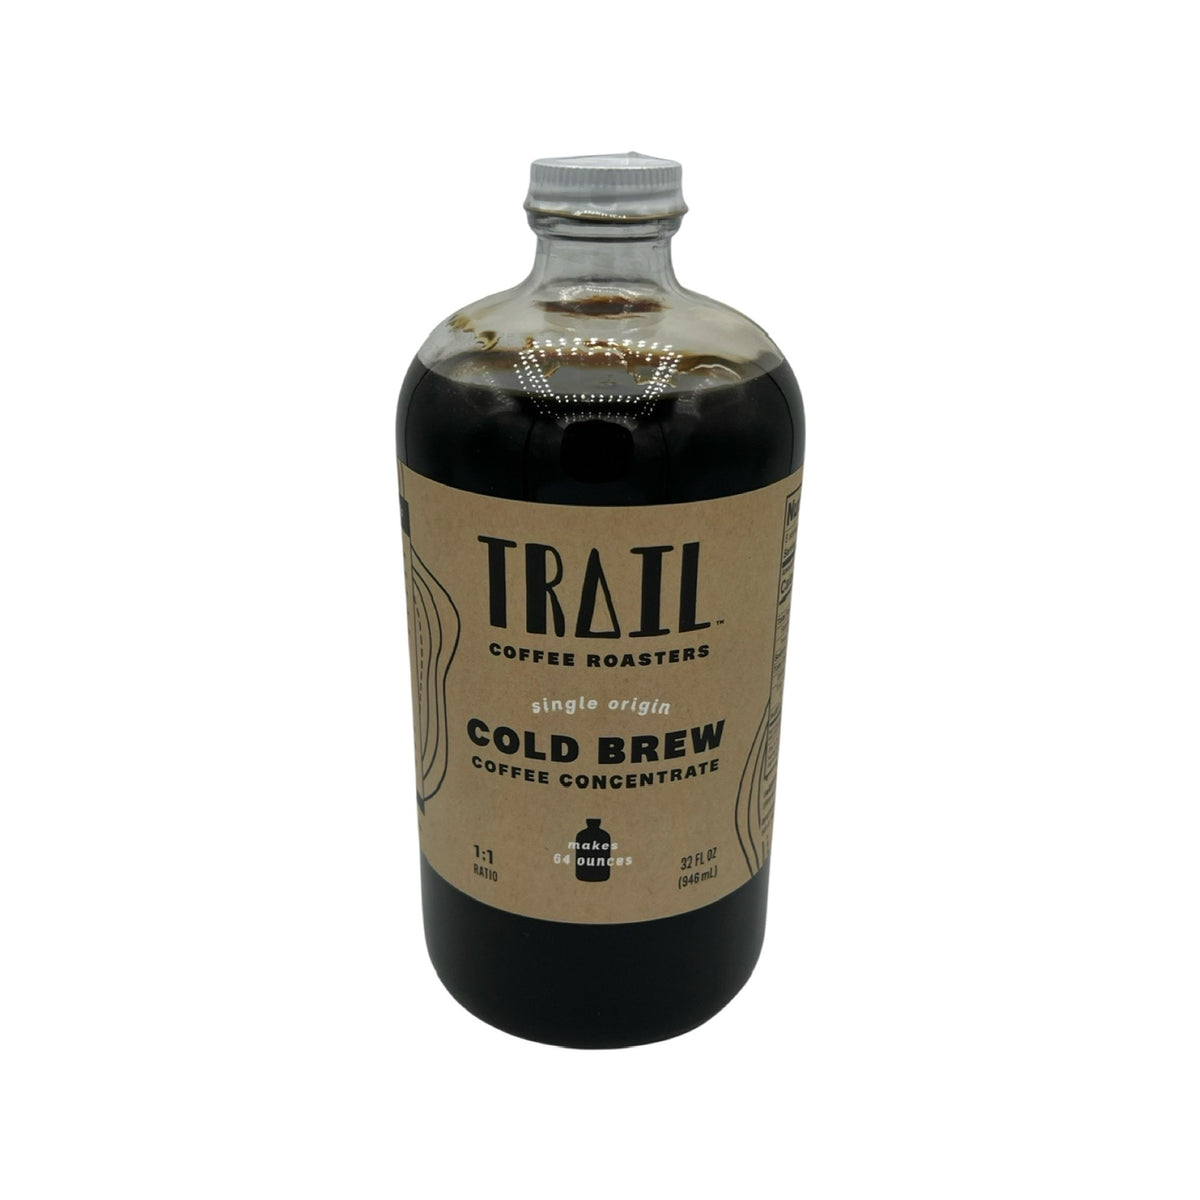 USDA Organic Cold Brew & Press Elixir, Ground Coffee, Carbon Negative, 16  Ounce 